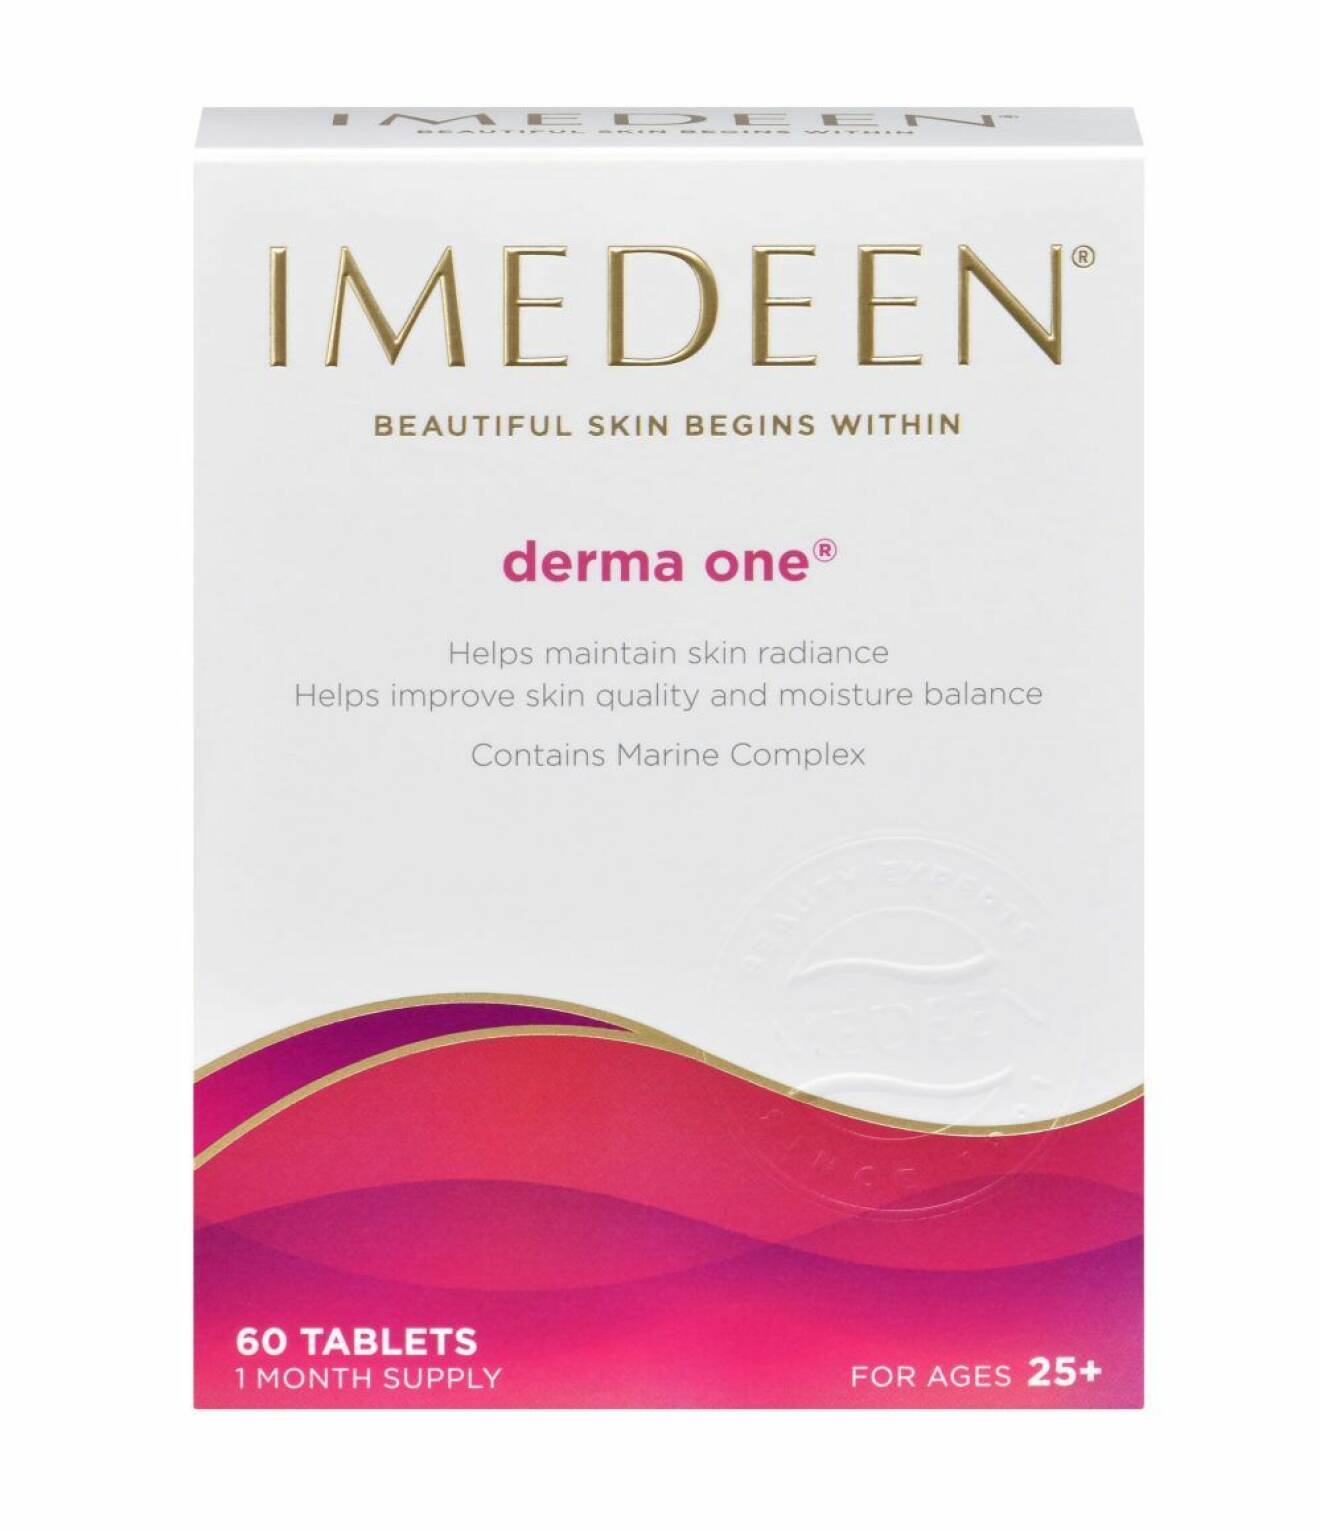 Derma one, Imedeen. 